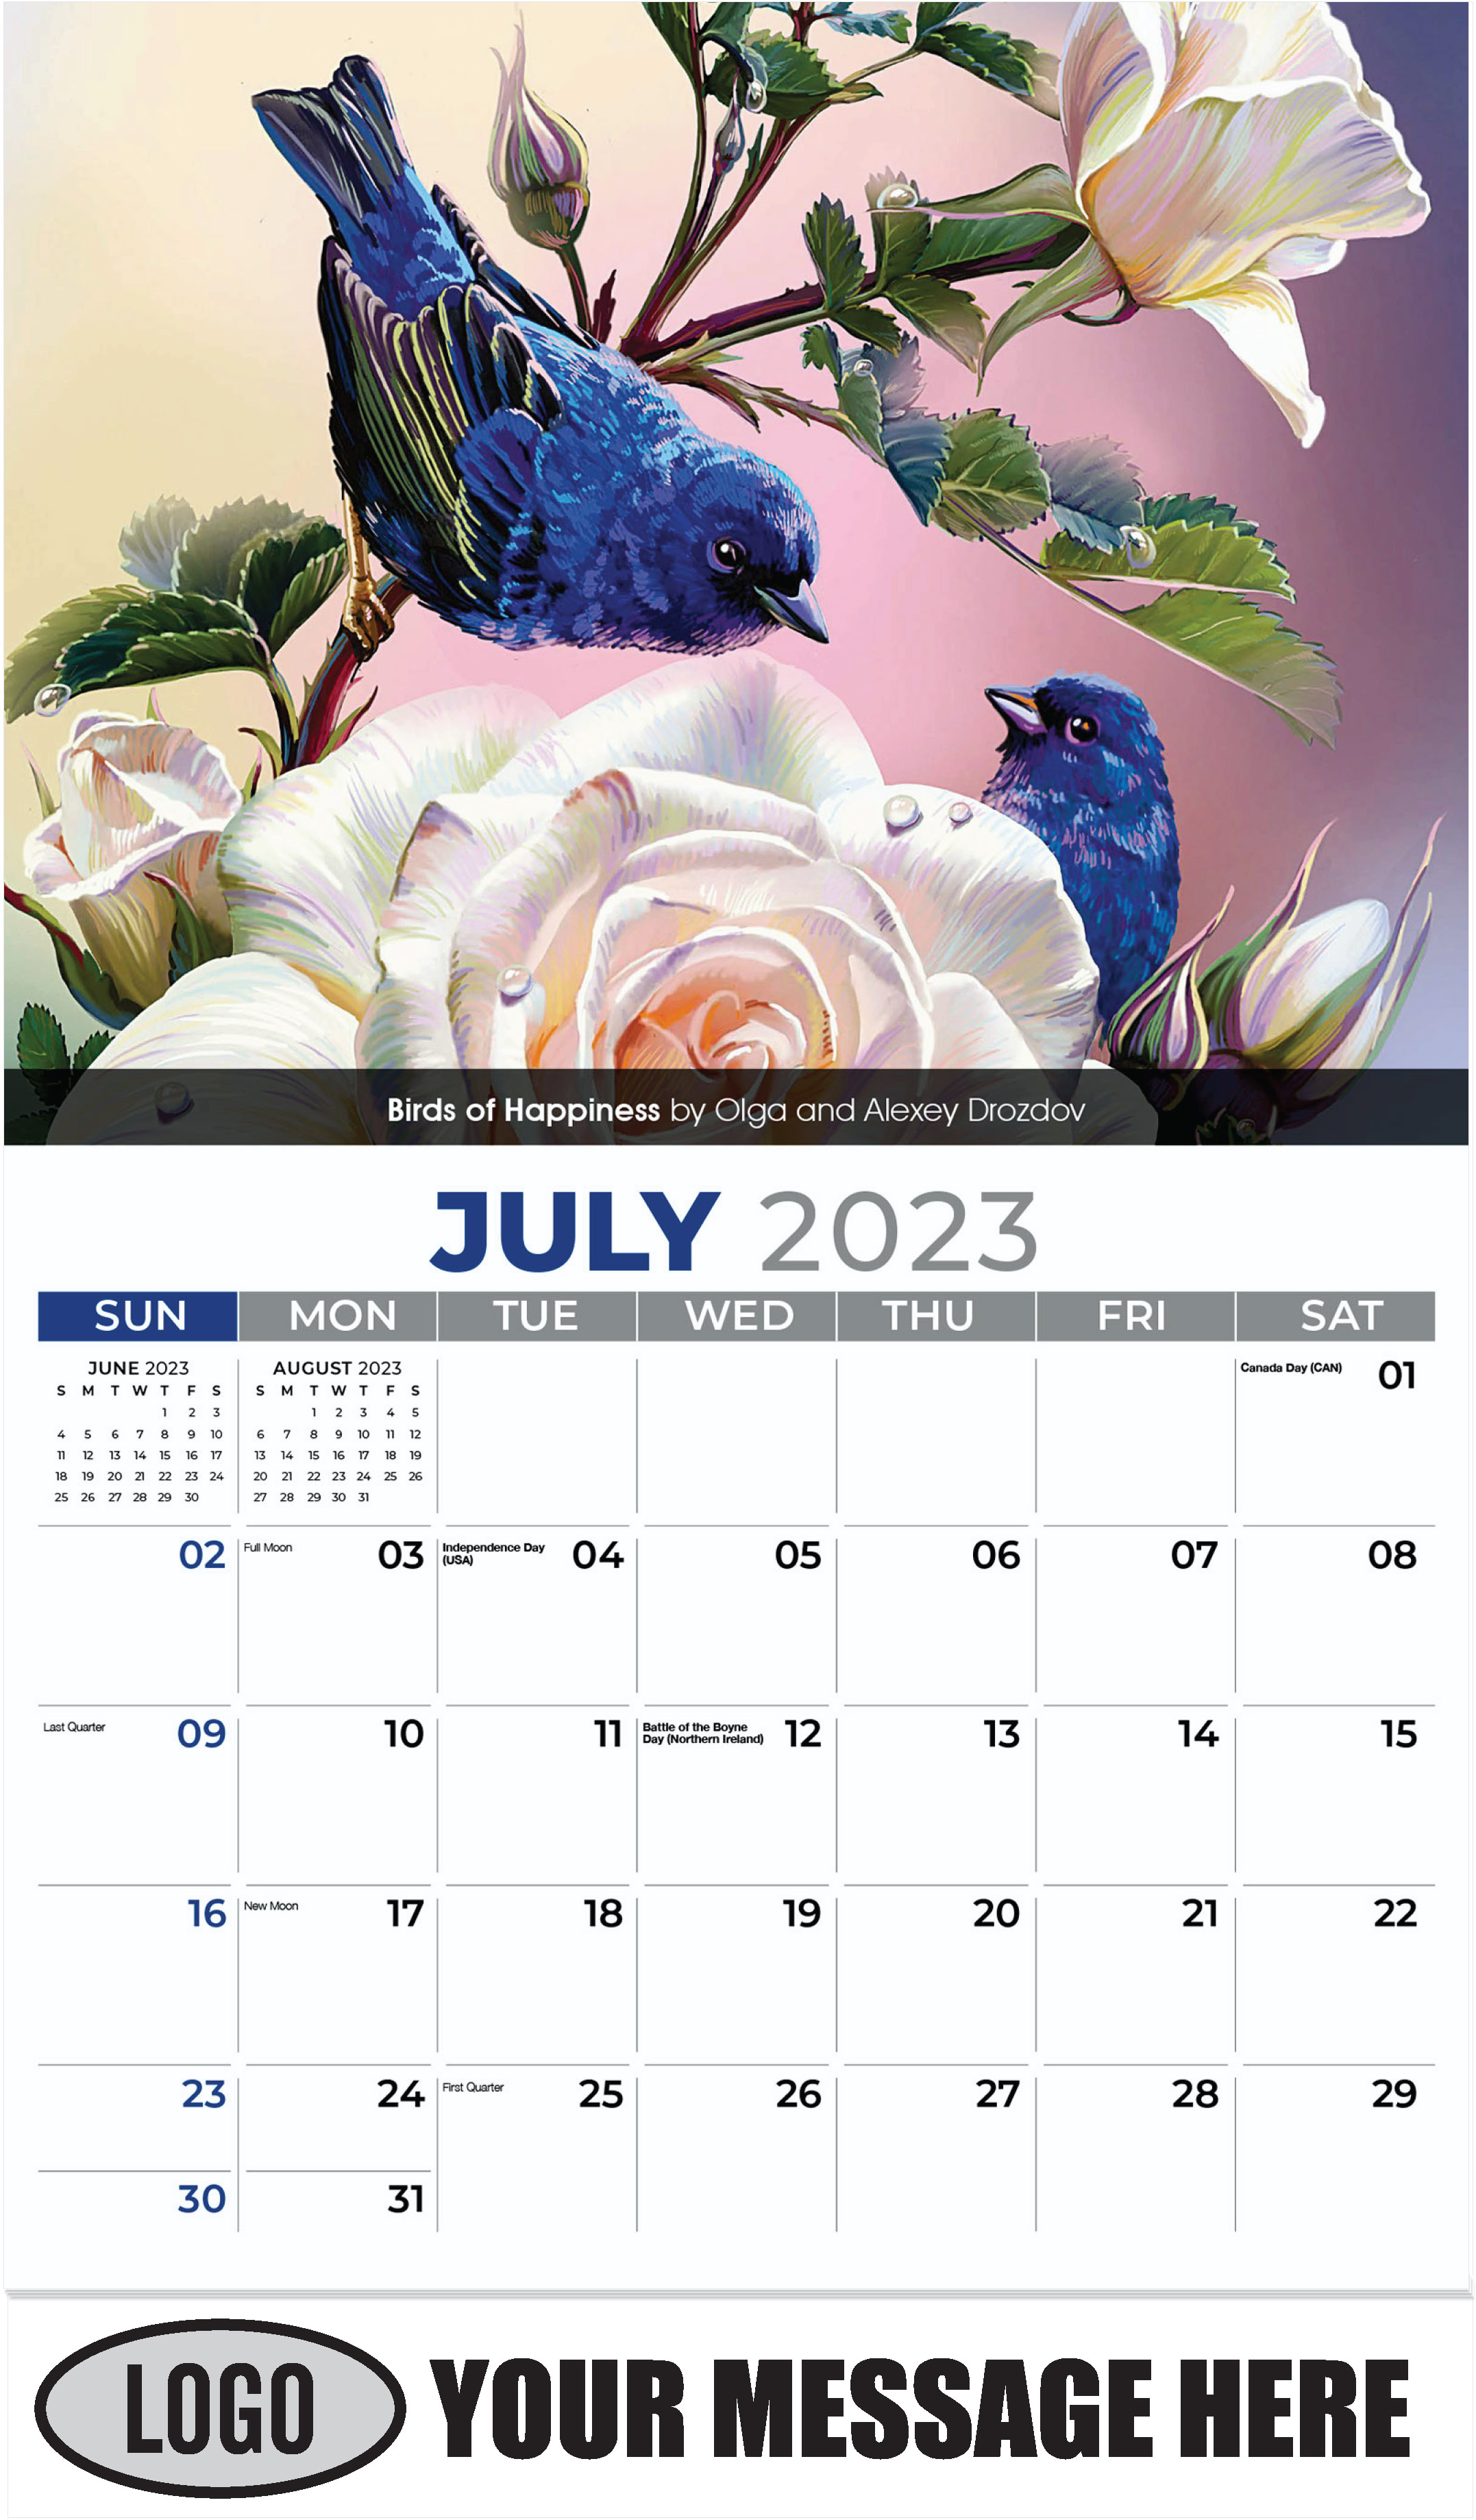 Birds of Happiness by Olga and Alexey Drozdov - July - Garden Birds 2023 Promotional Calendar